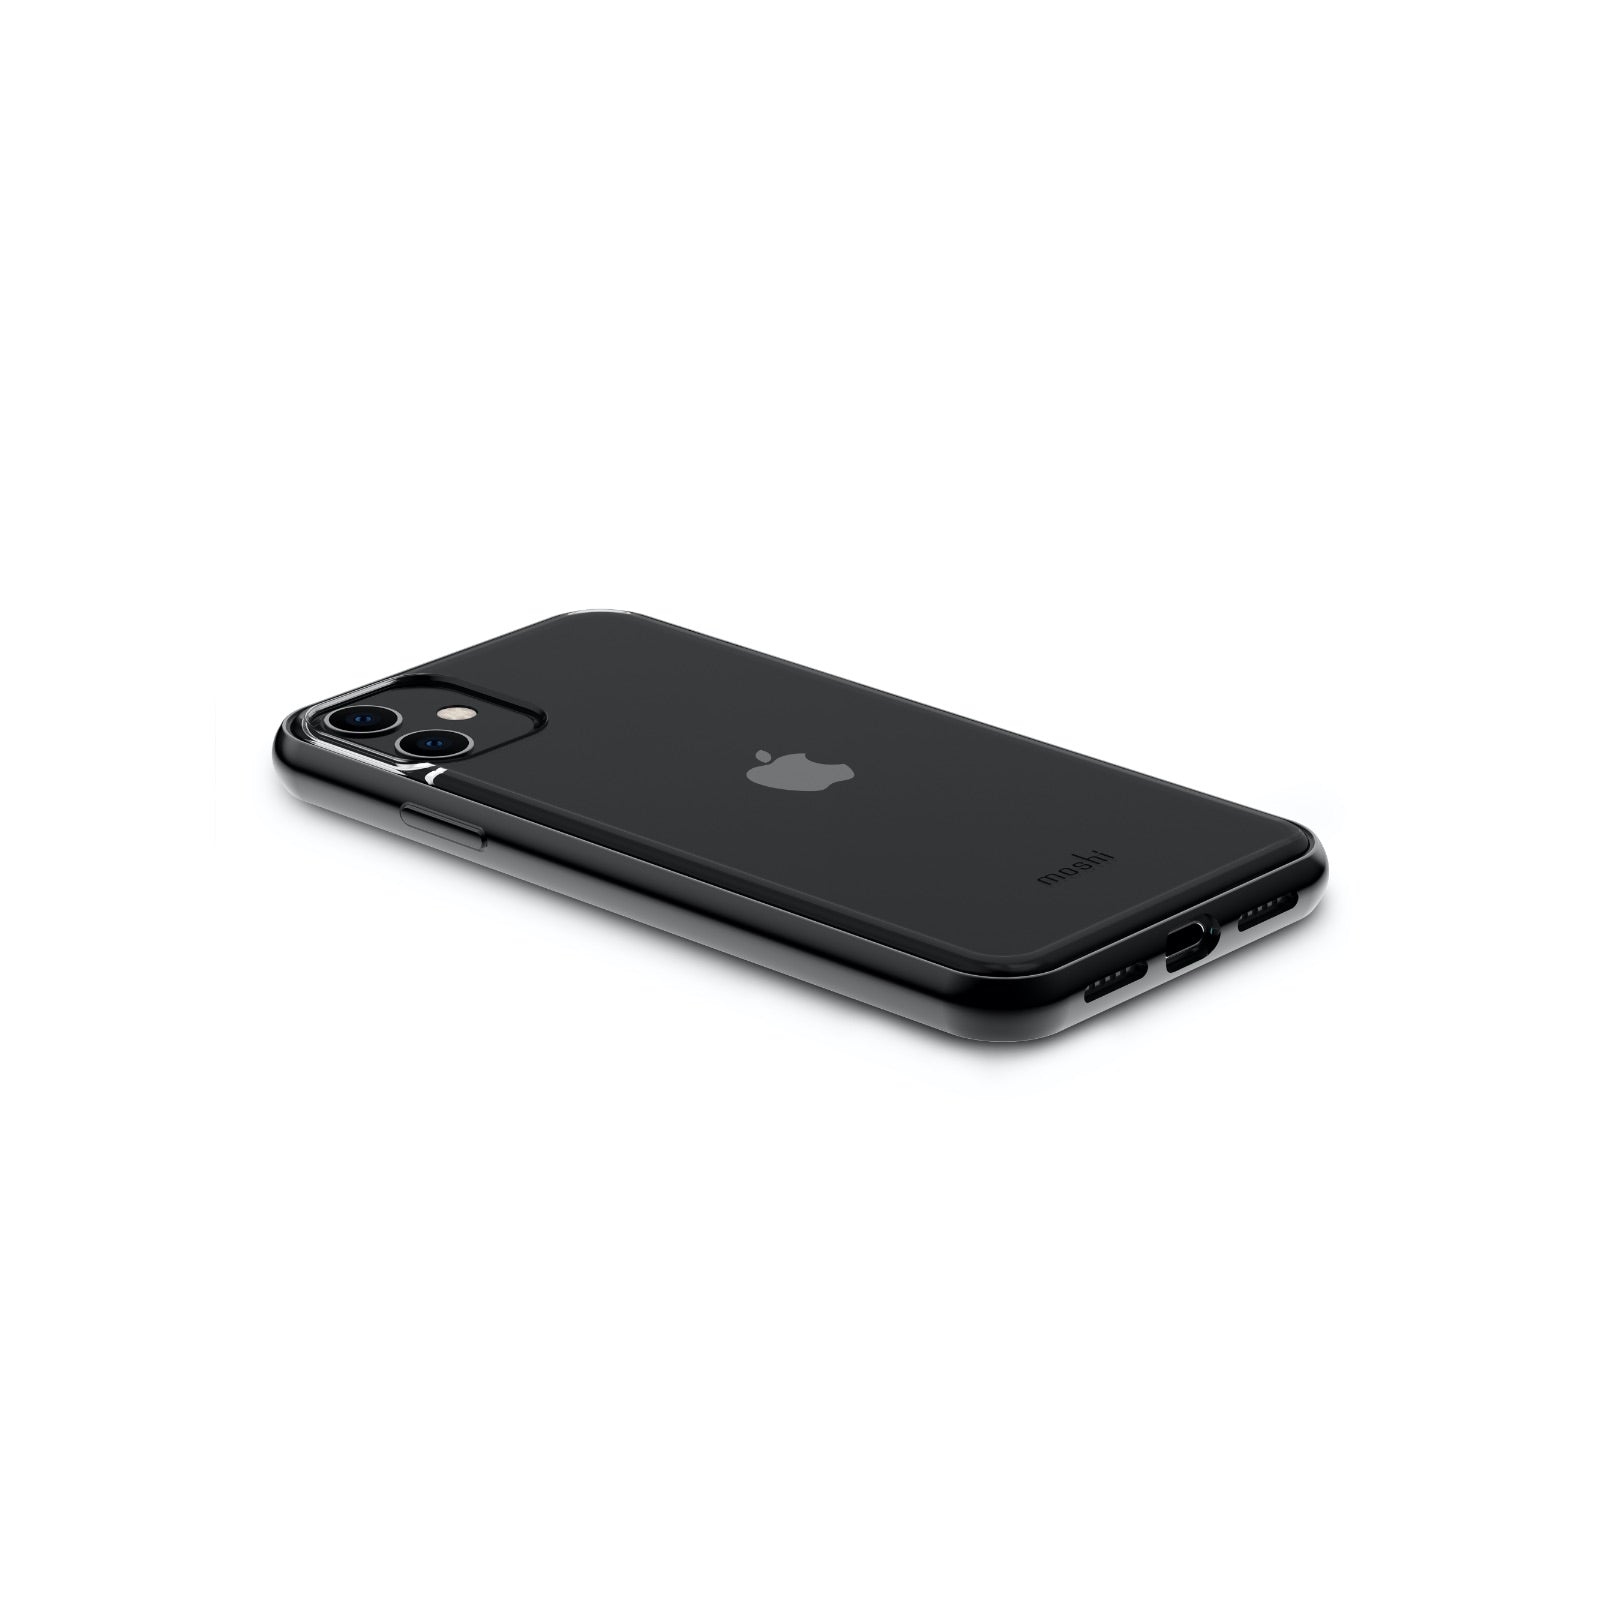 Moshi Vitros Slim Clear Case for iPhone 11